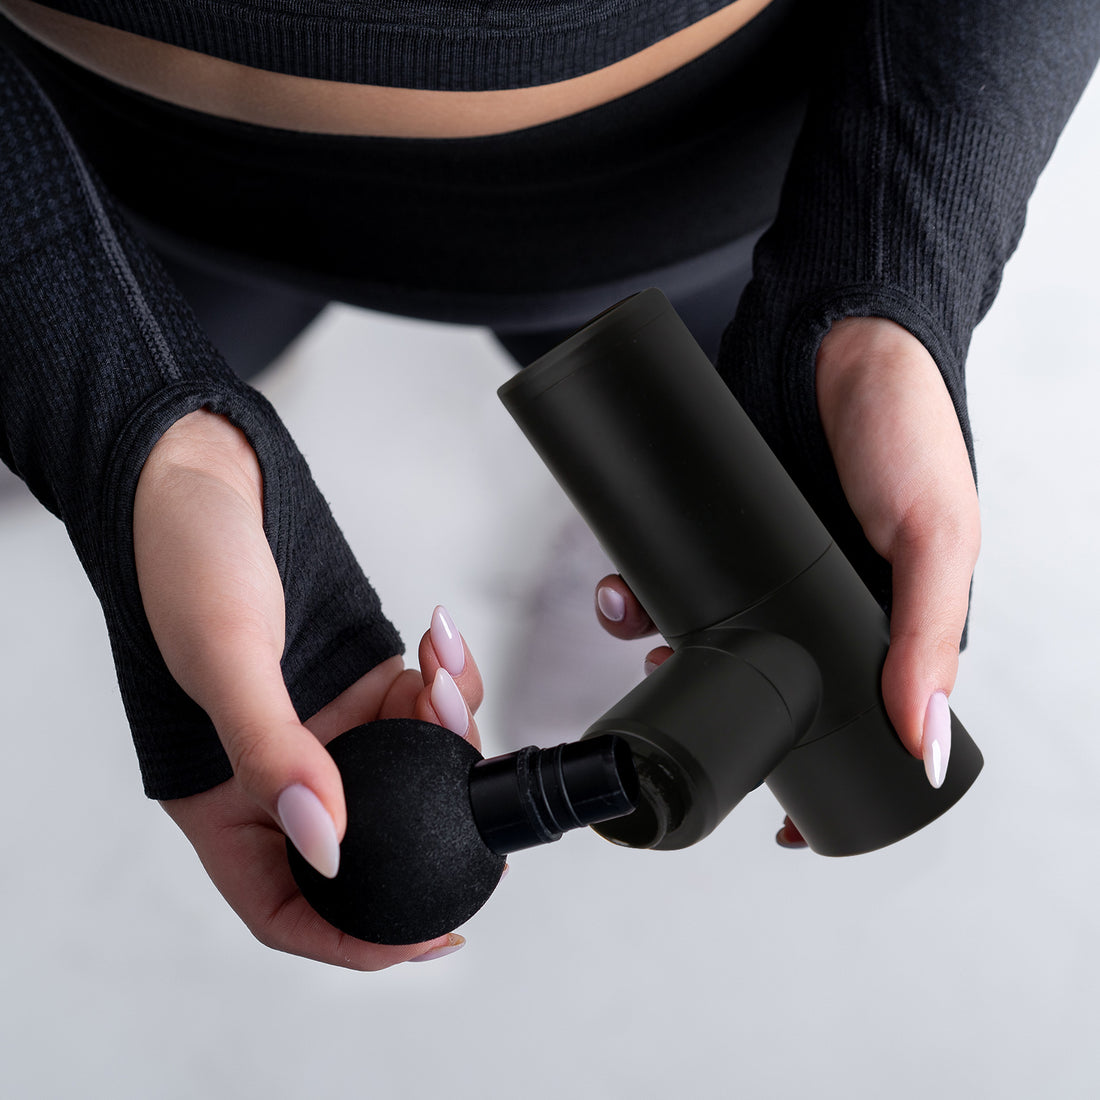 Mini Vibration Therapy Massage Gun Black